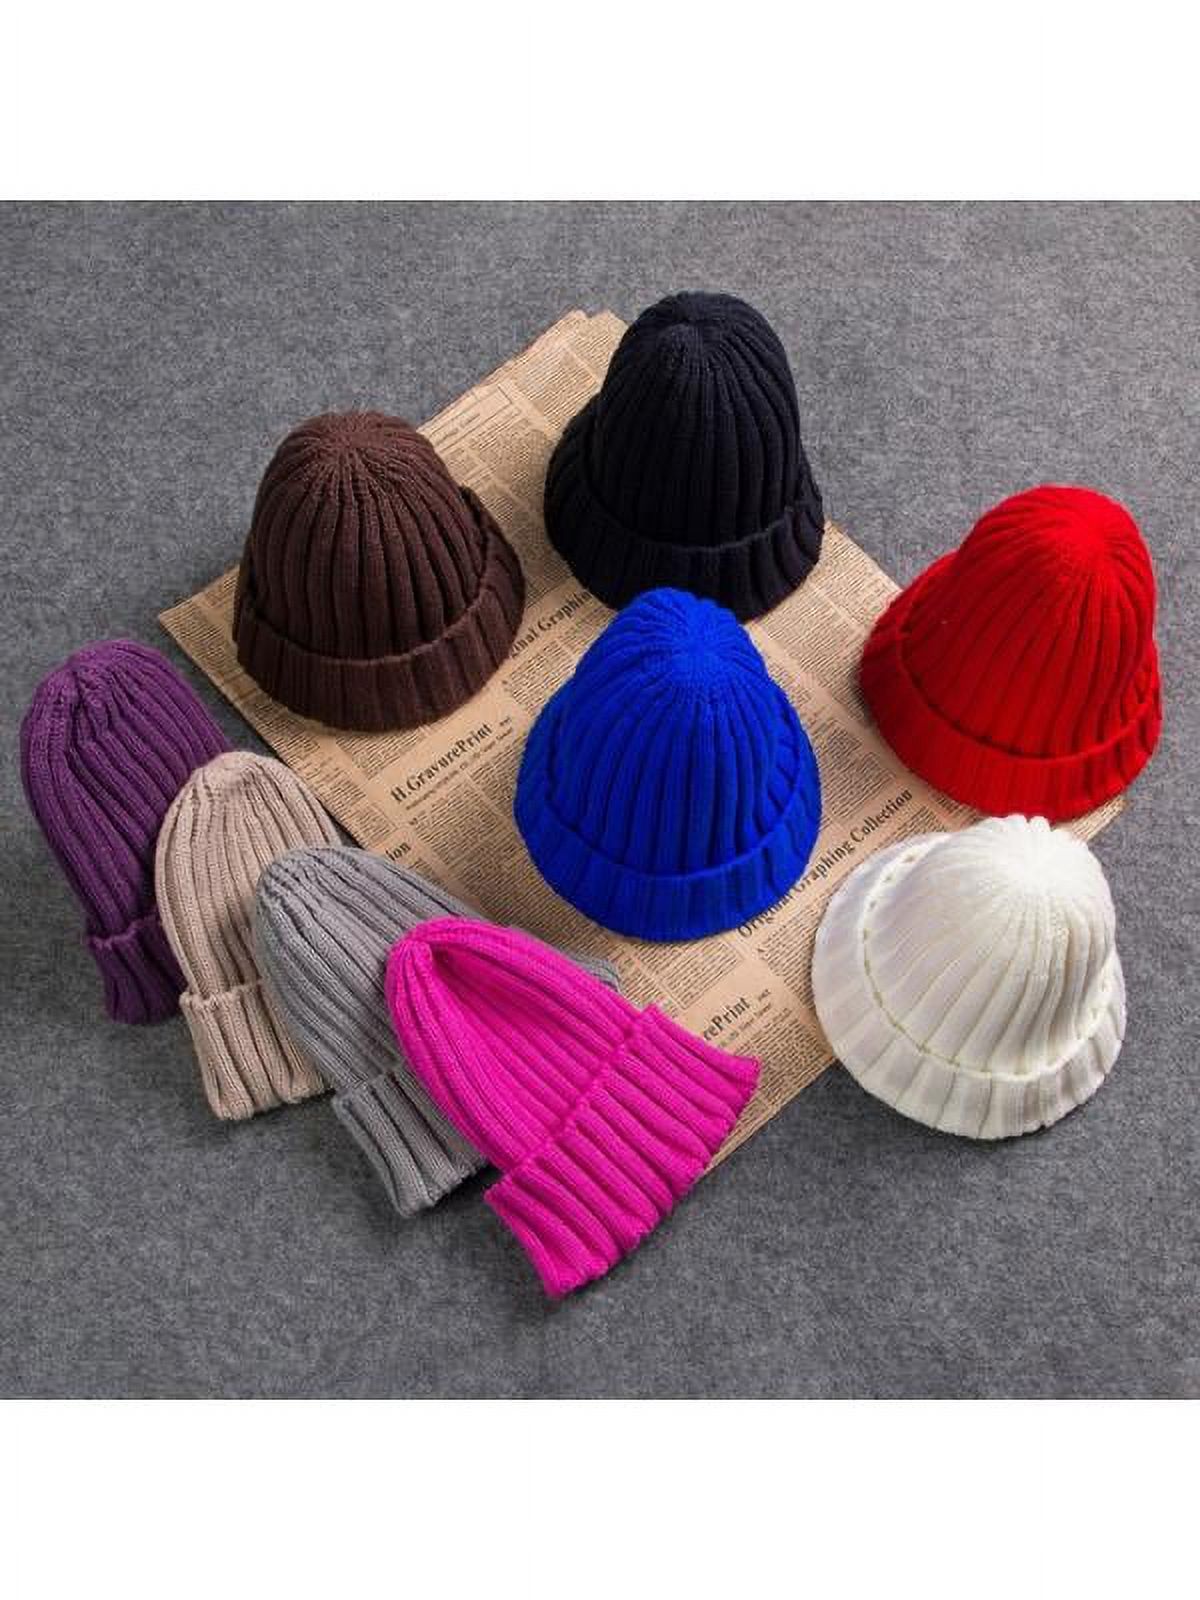 Ropalia Fashion Women Men Winter Knitted Beanies Cap Ski Hat Warm Crochet Knit Cap Hip-Hop Plain Hat - image 4 of 5